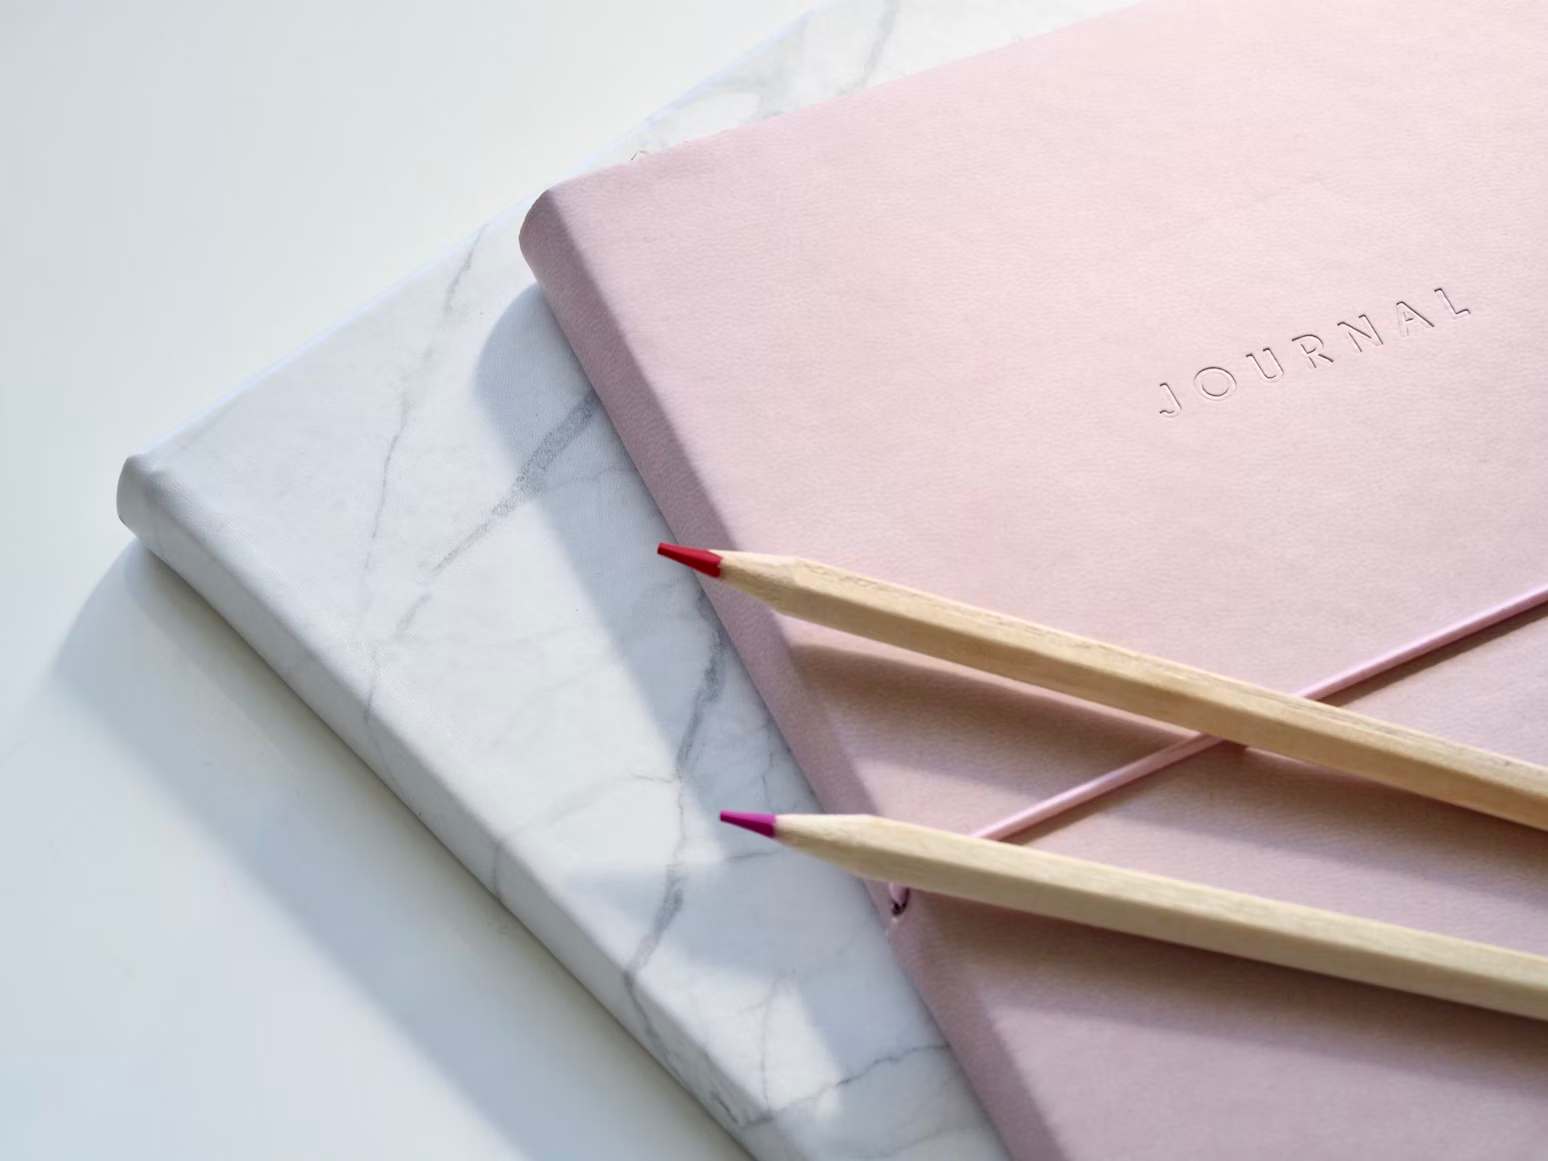 Pencils on top of journal